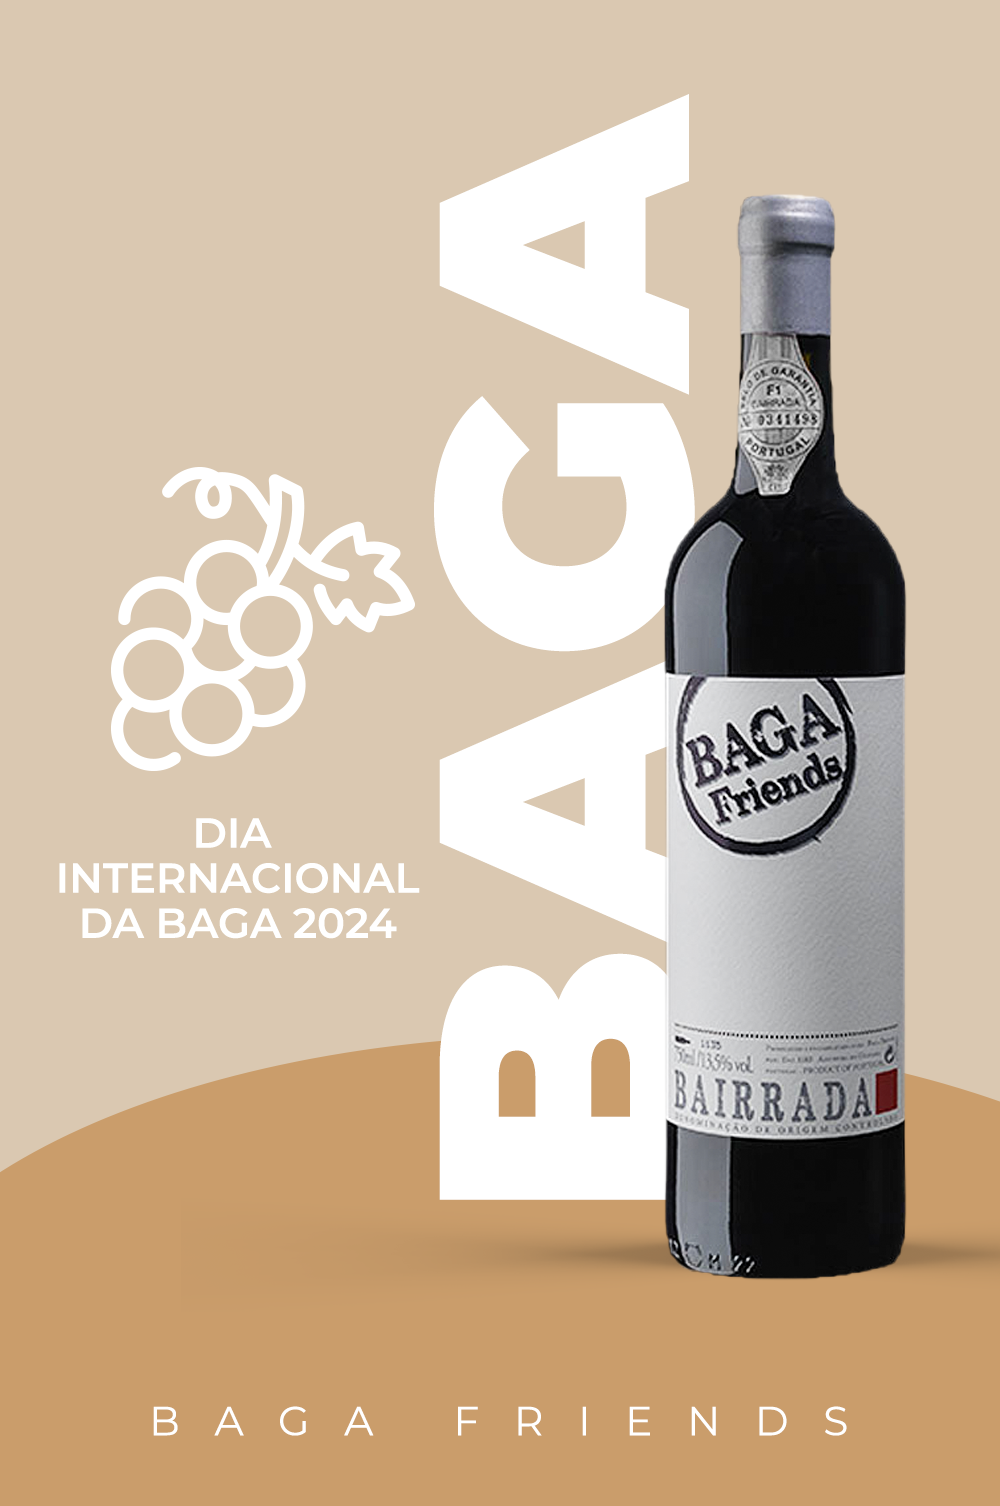 Bairrada celebrates International Baga Day, with the Baga Friends